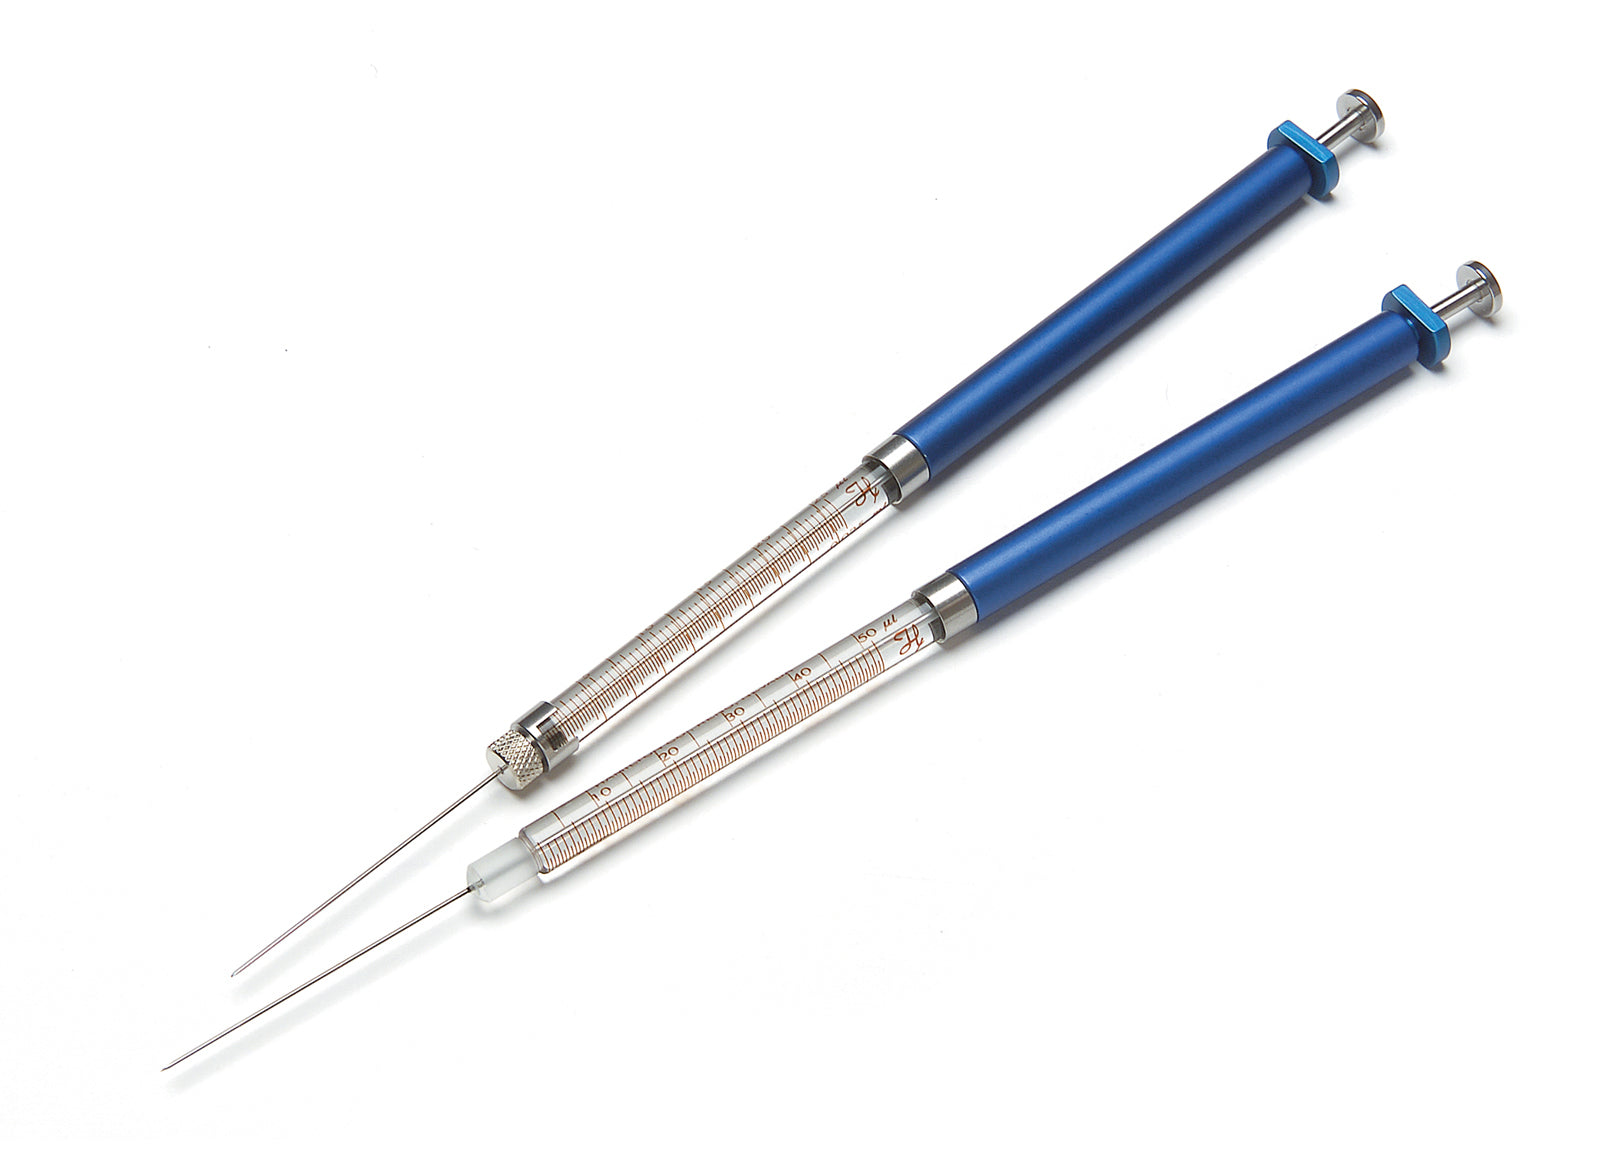 Hamilton Company 800 Series Microliter Syringes